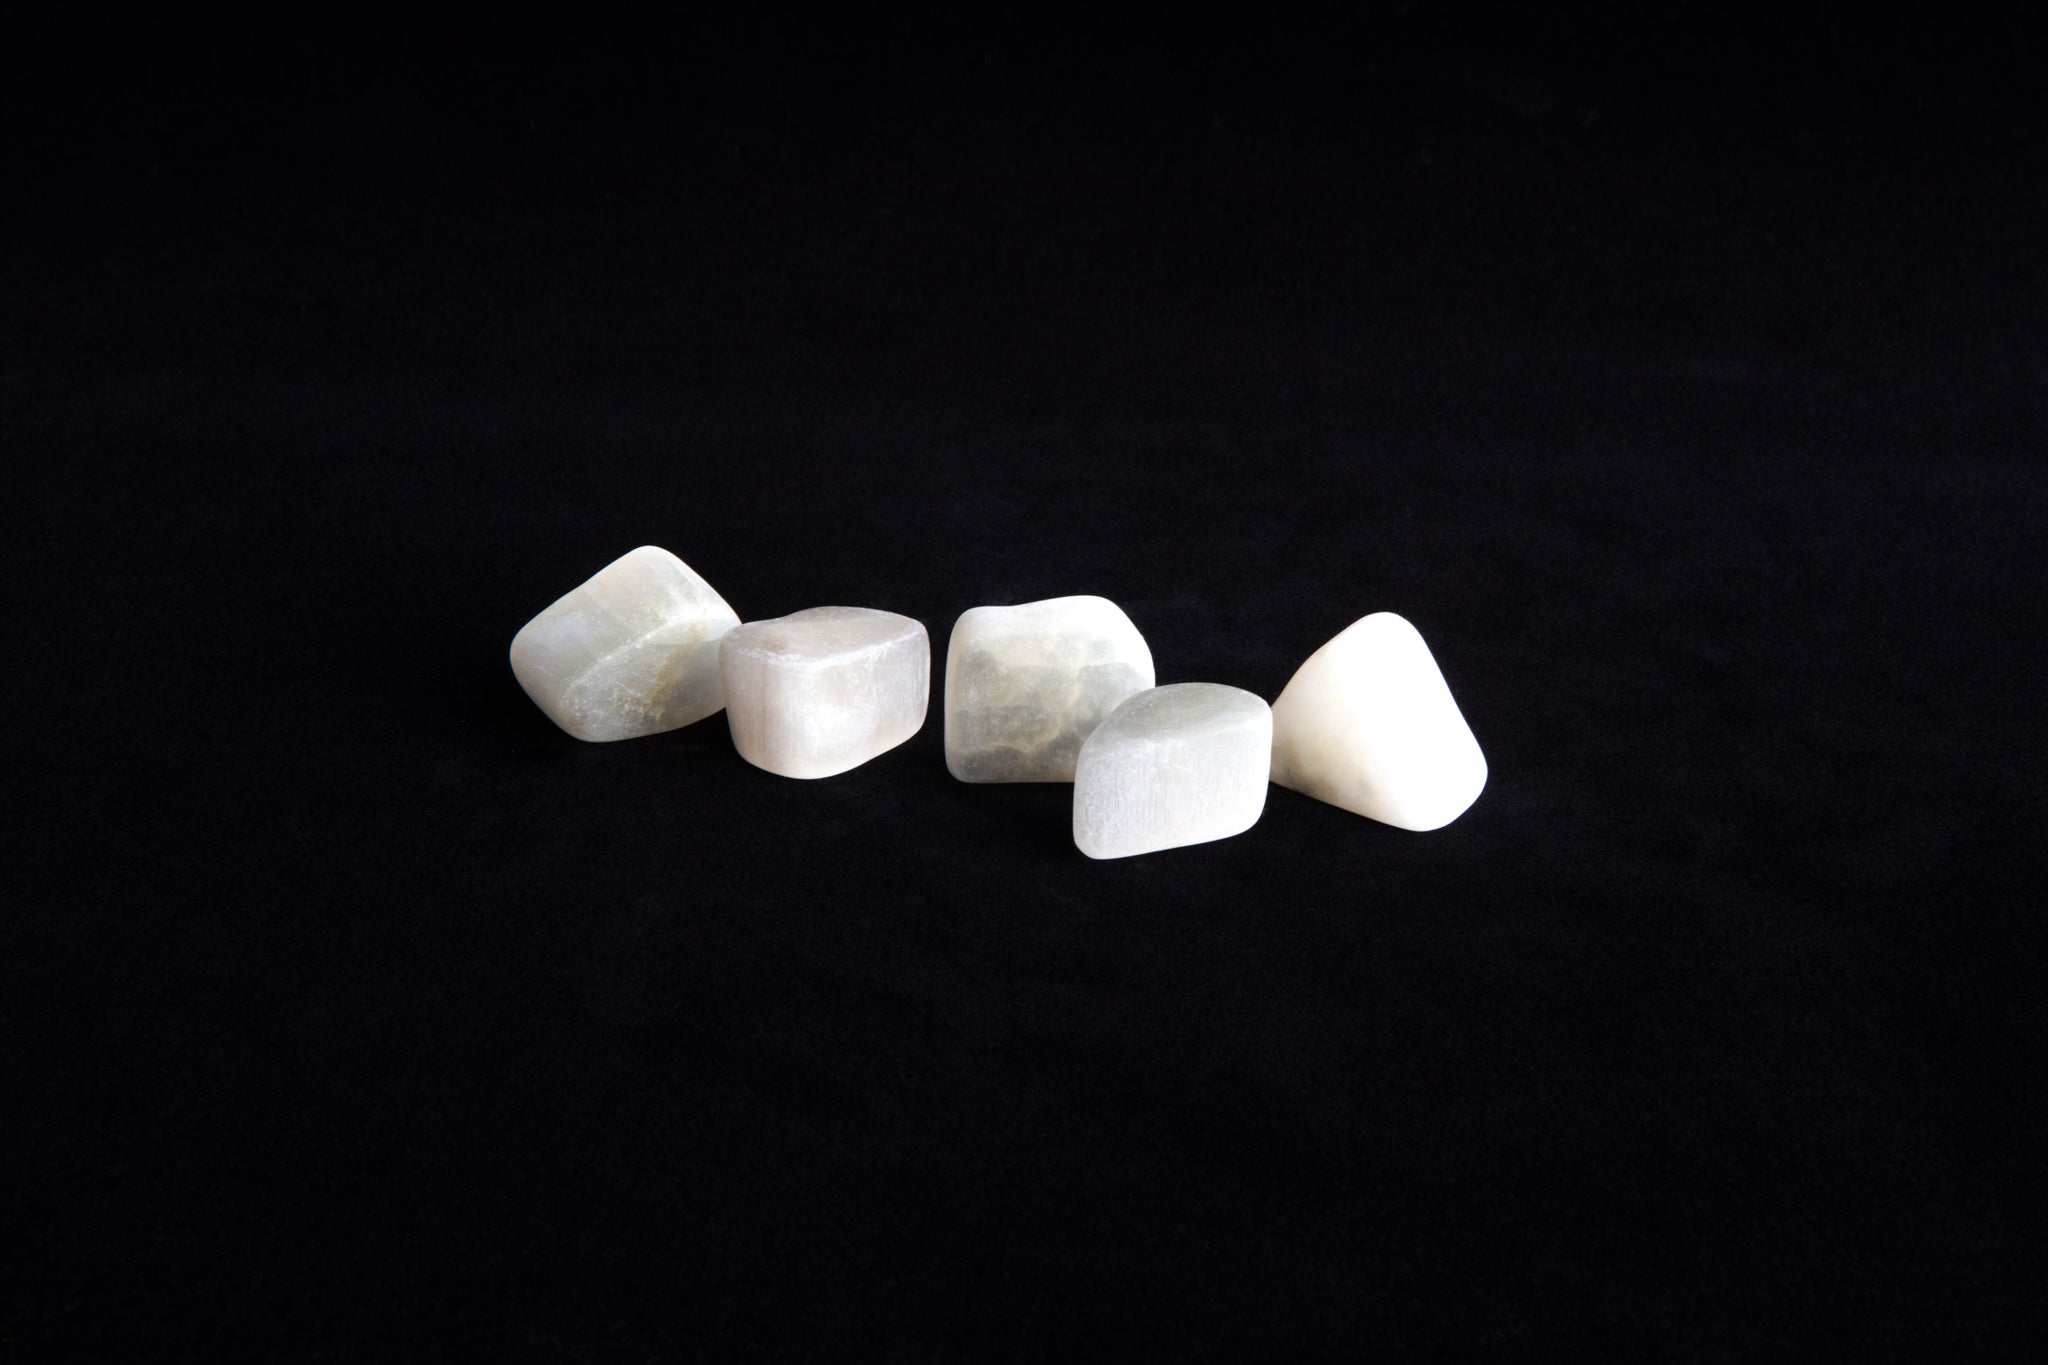 Small sized ulexite pocket stones